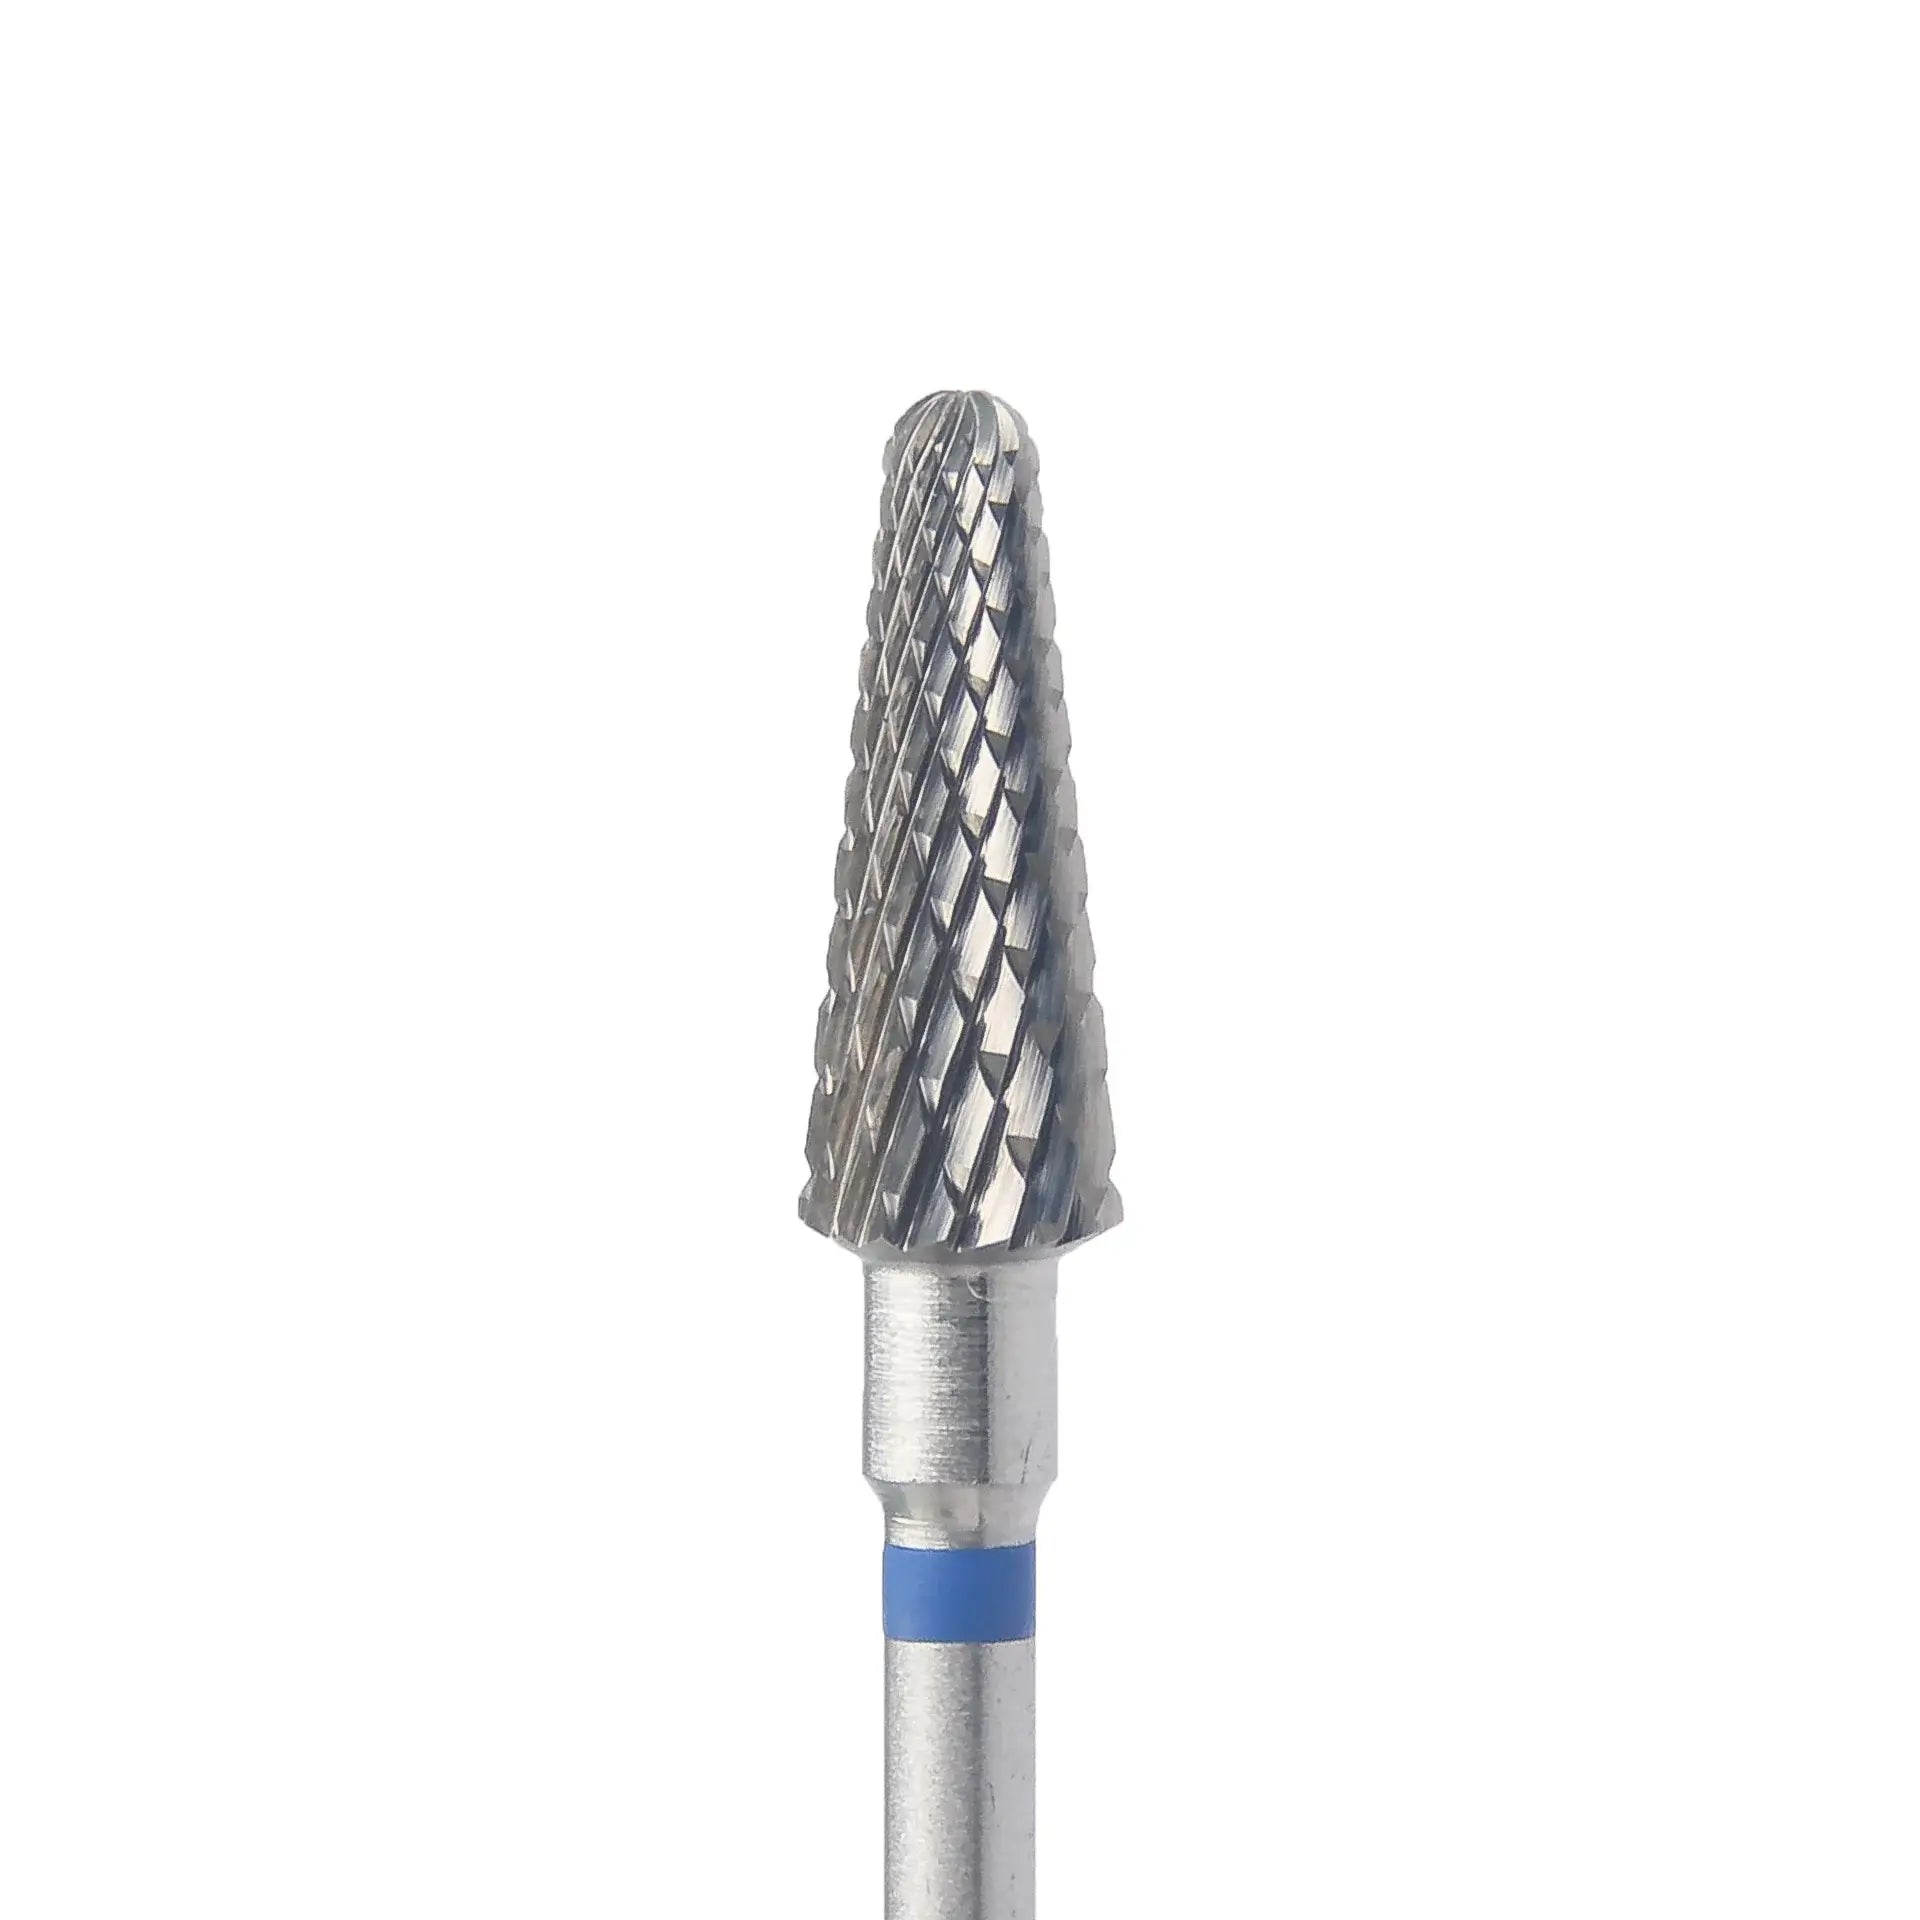 Tungsten Carbide Cone E-File Nail Drill Bit - Medium Grit (Blue) 5mm